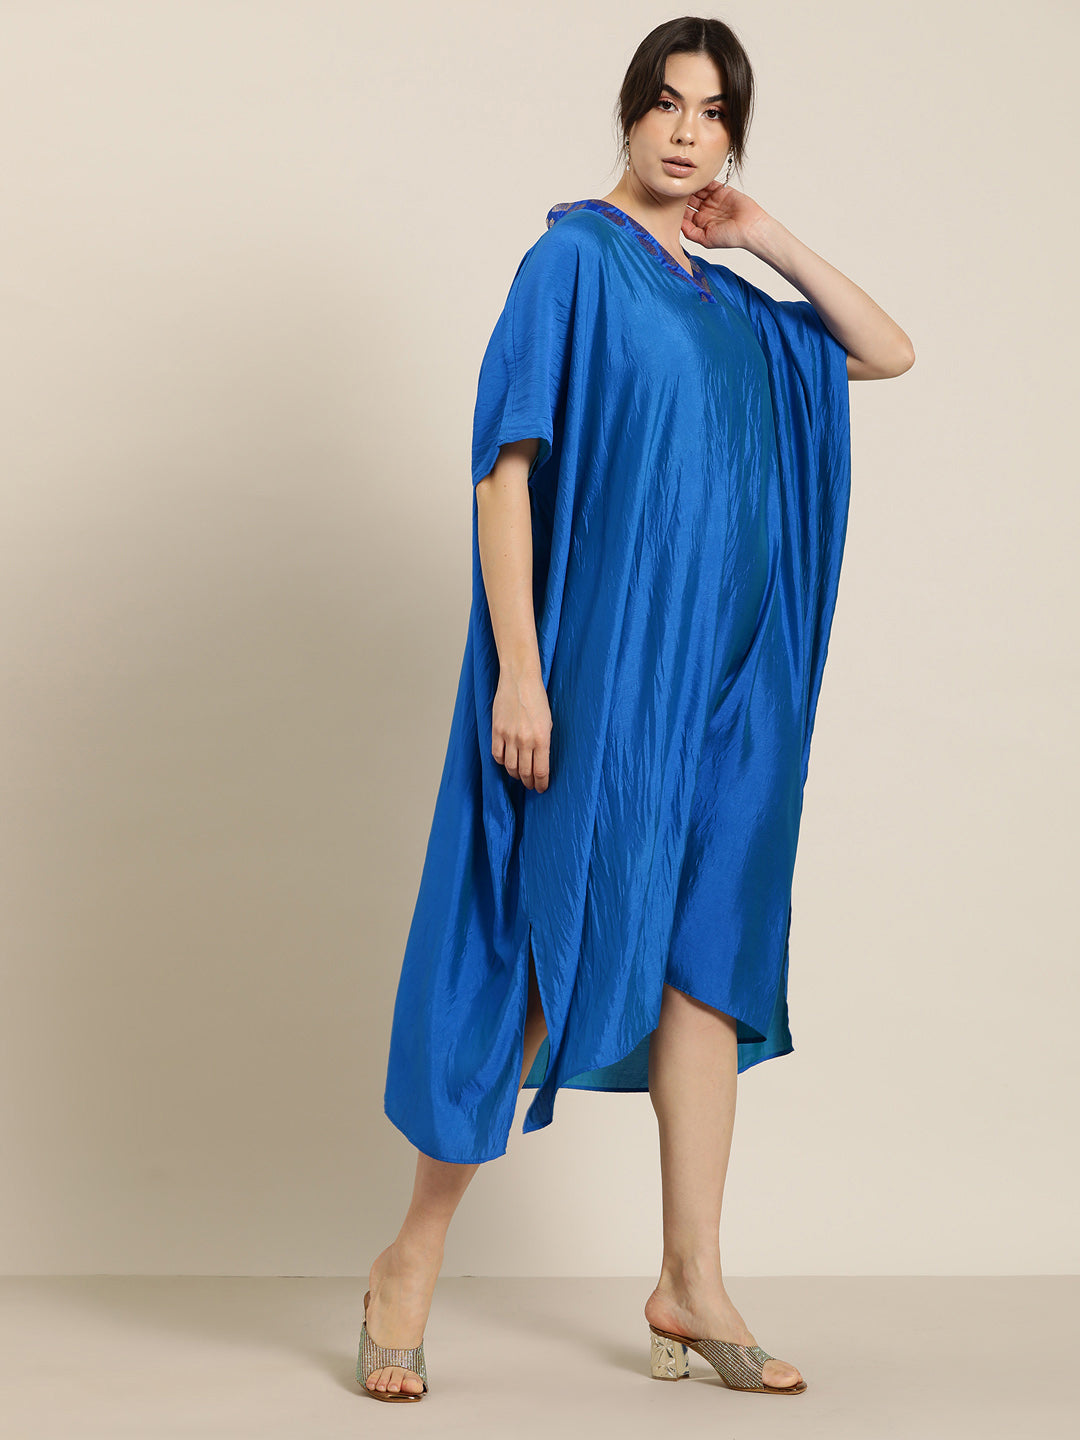 Royal Blue silk Kimono dress with brocade